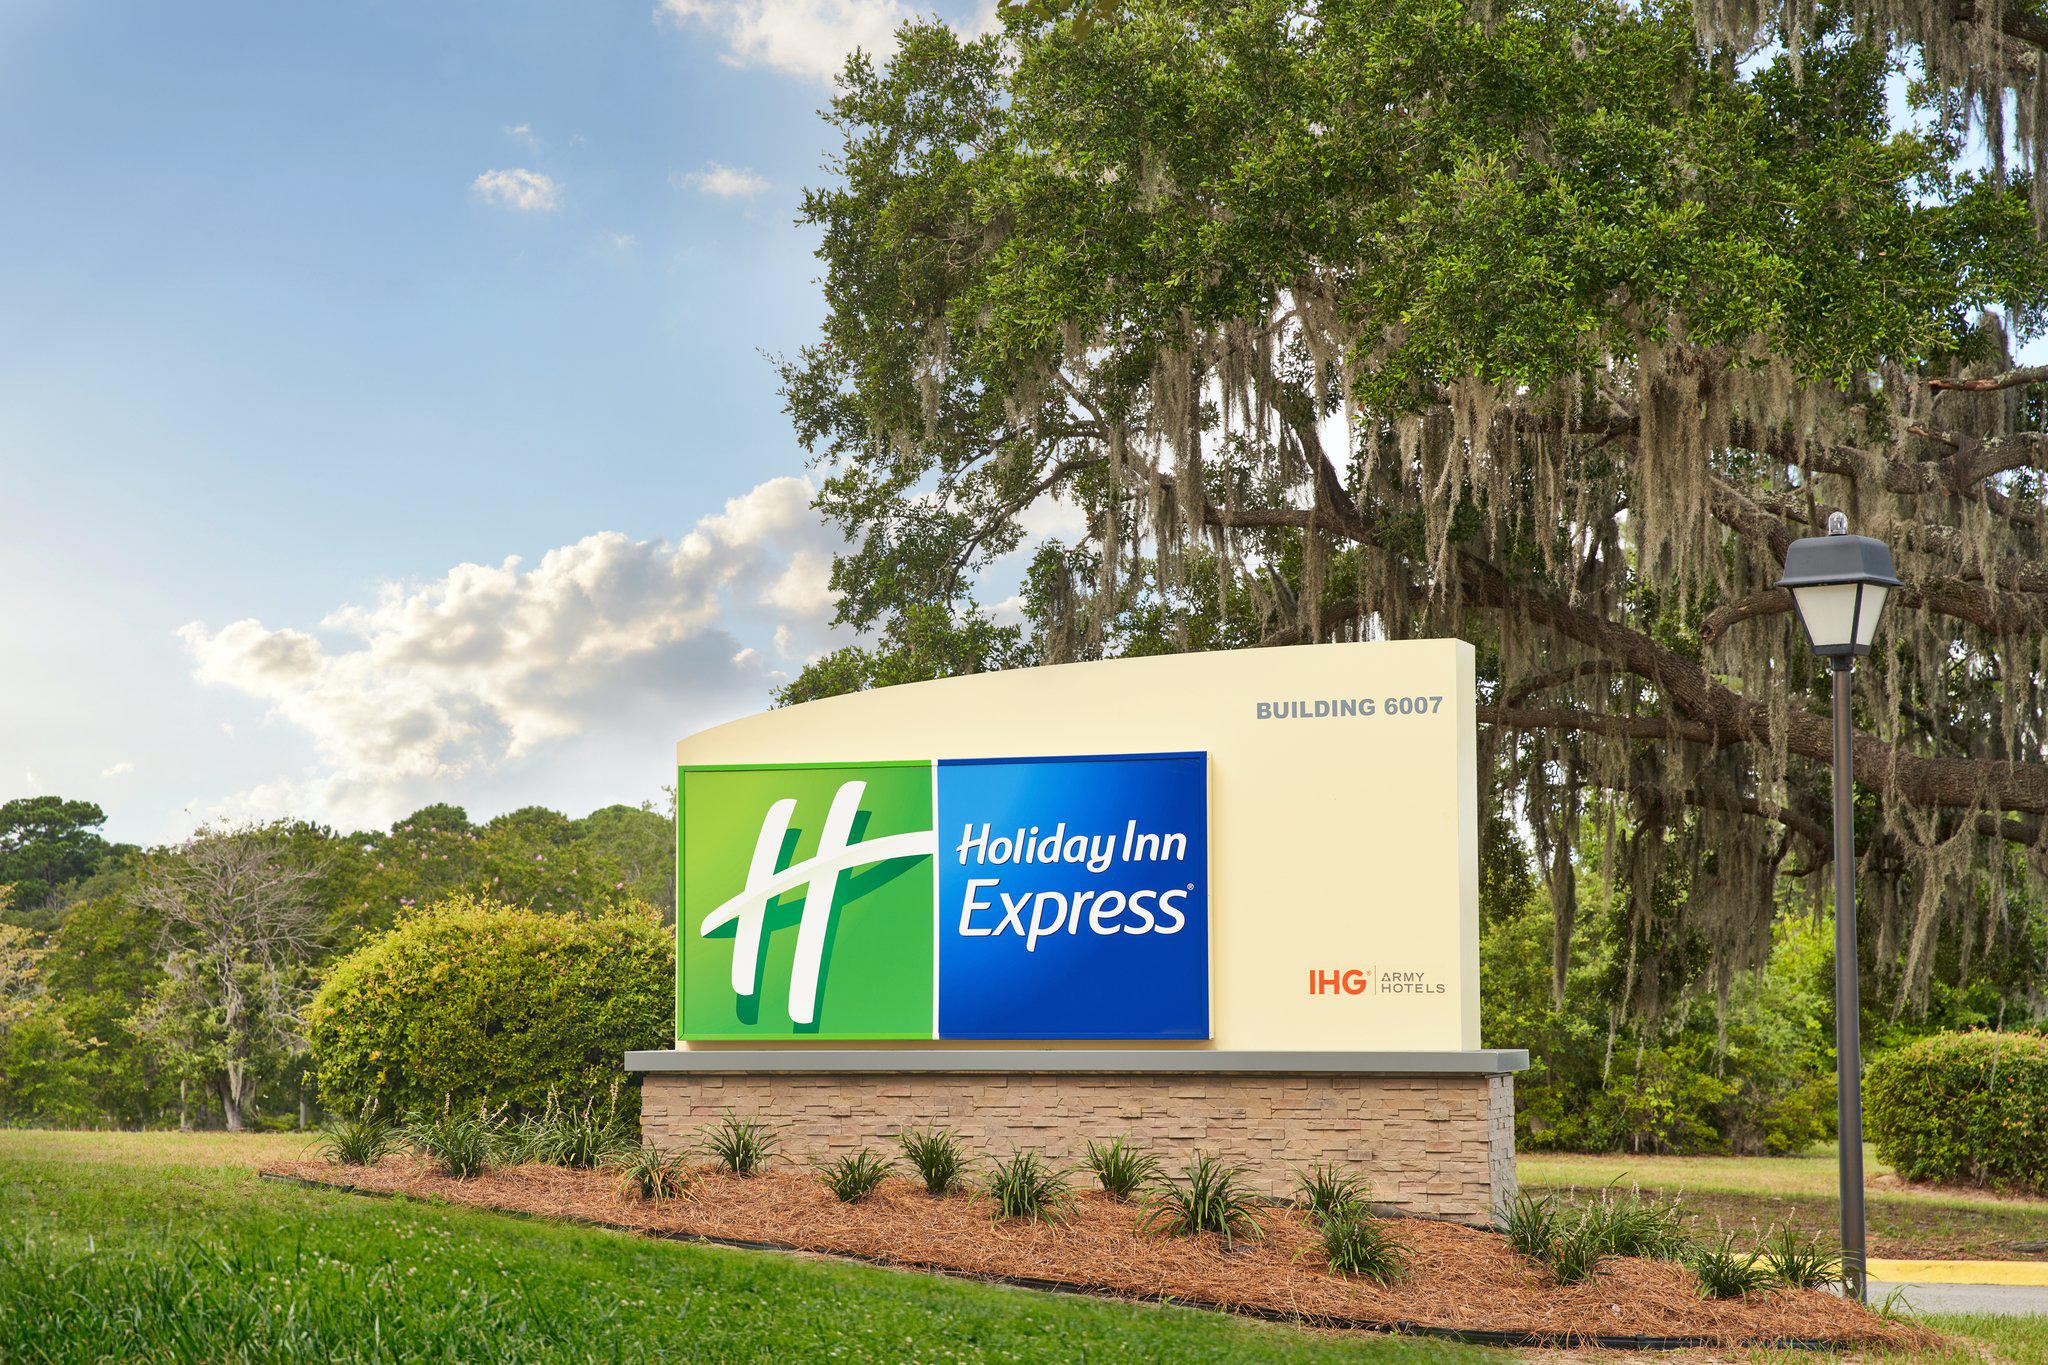 Holiday Inn Express Building 6007 Savannah (912)355-1060